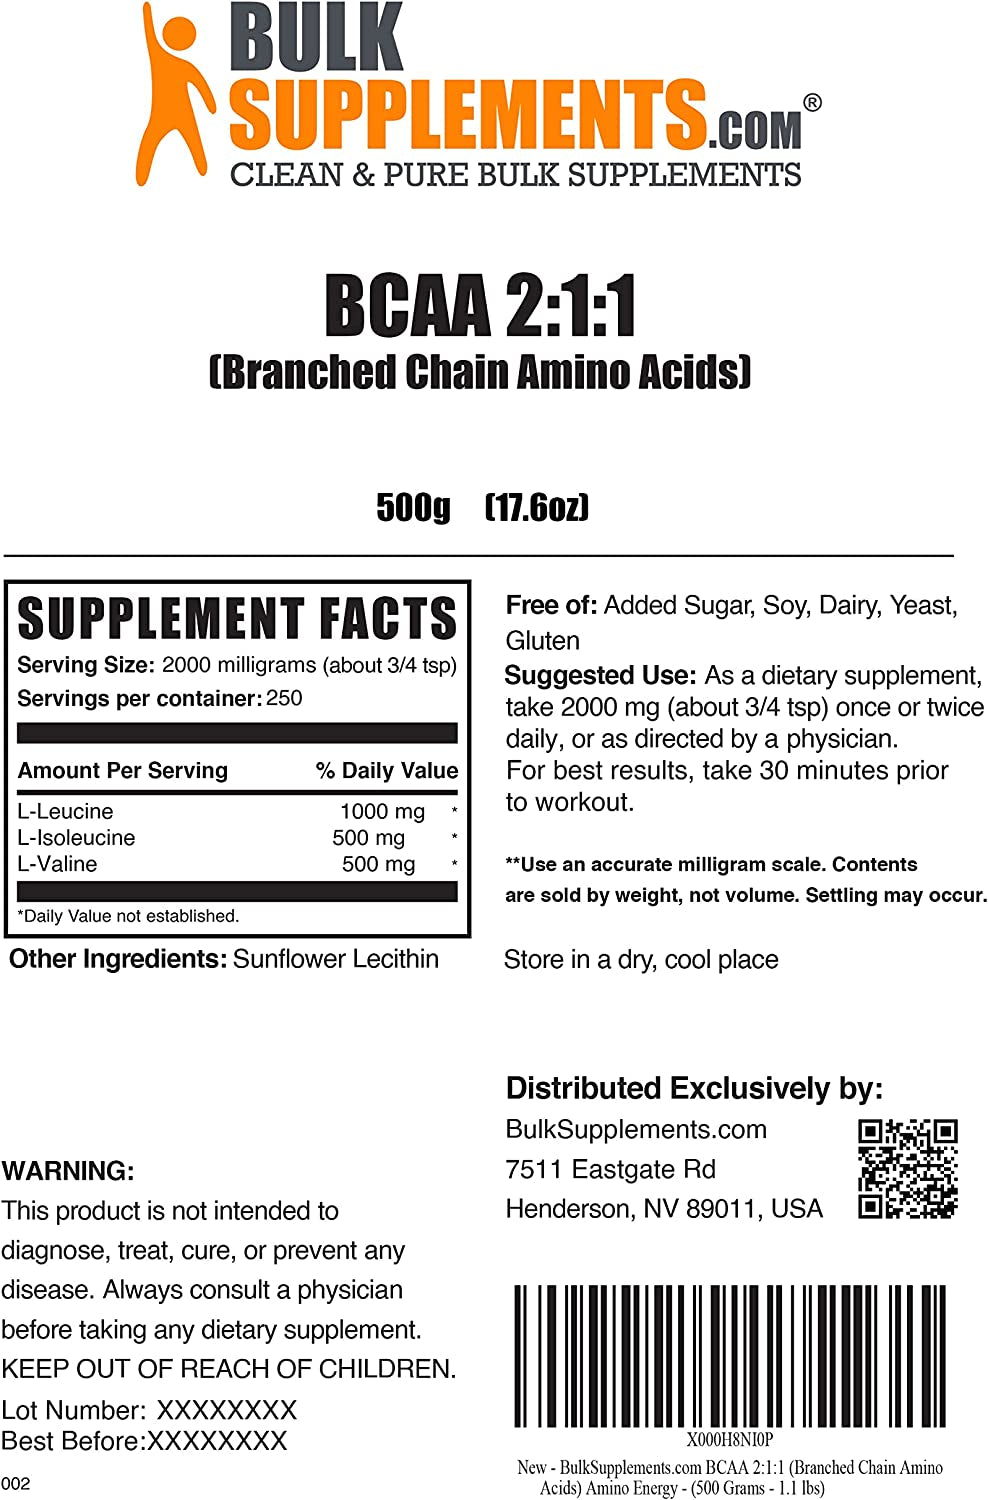 BULKSUPPLEMENTS.COM BCAA 2:1:1 Powder 500G, Creatine Powder 500G, Beta Alanine Powder 500G, & L-Glutamine Powder 1Kg (Pack of 4) Bundle